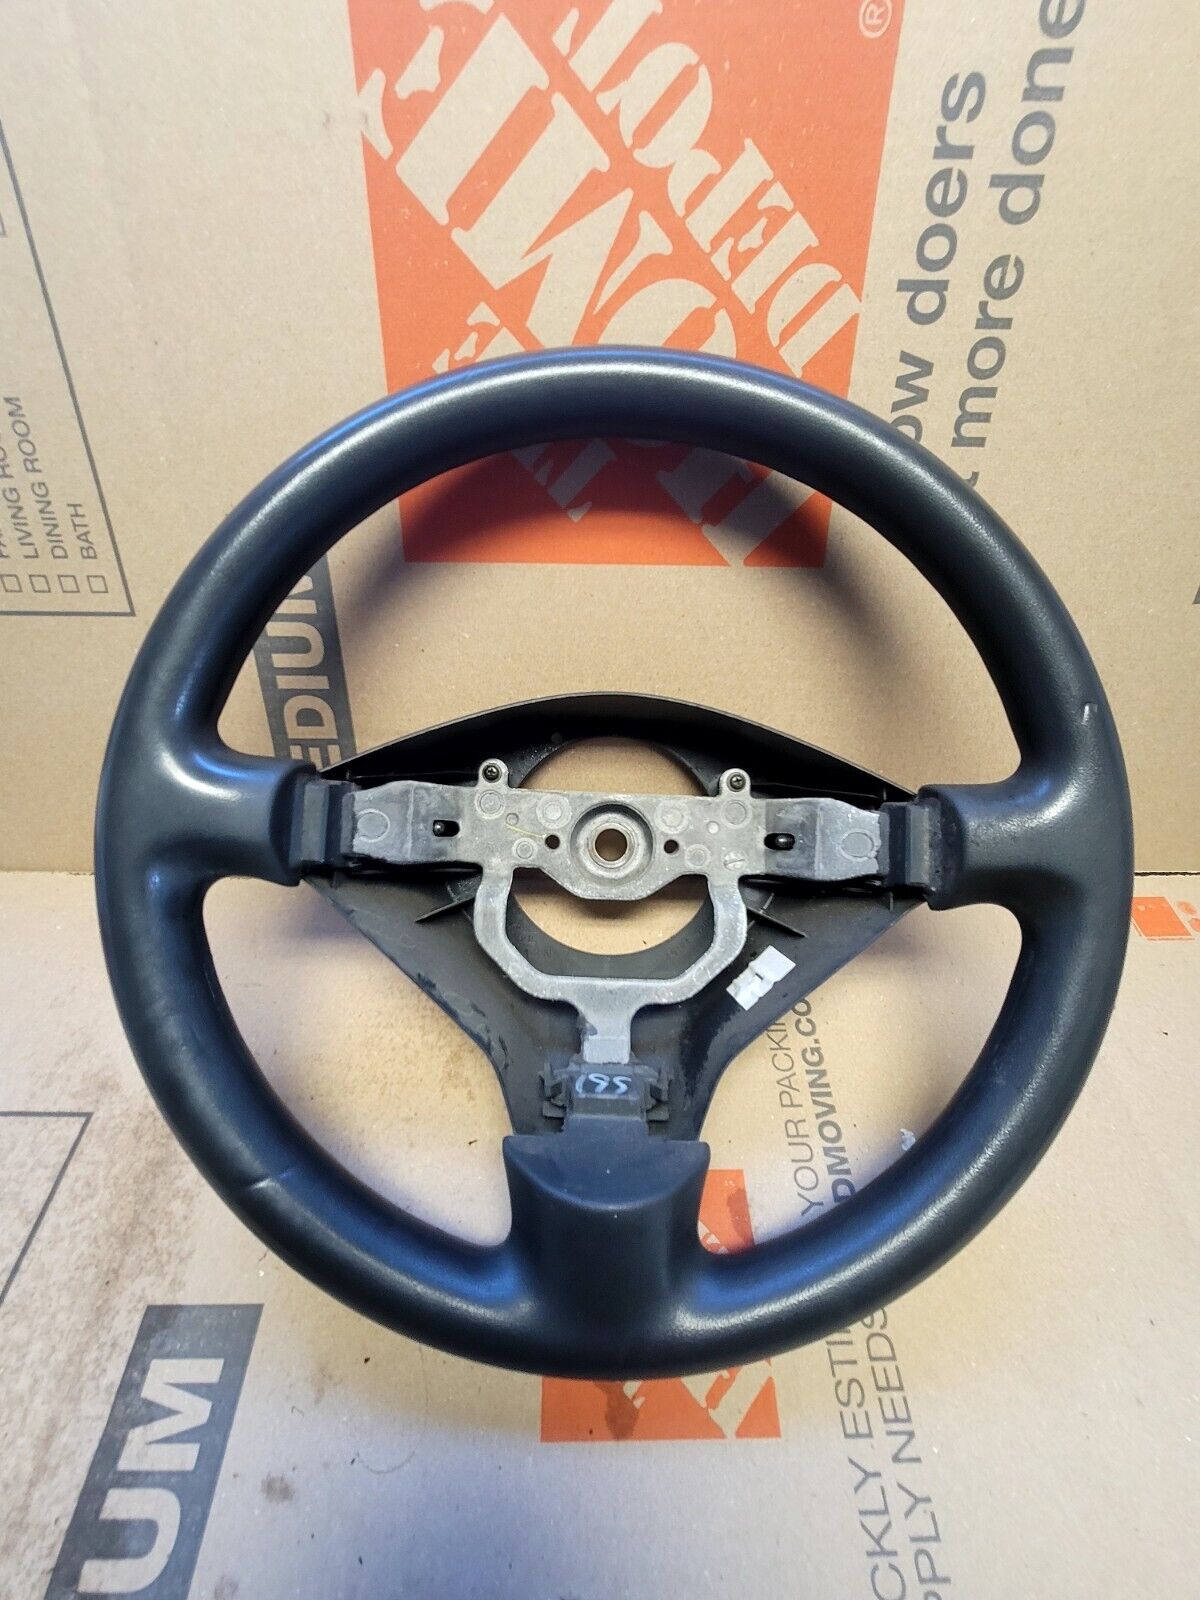 Scion XB, Steering Wheel C50, 2004-2006, Black, FZ96, M/T, 5SPD, 45100-52080-B0 